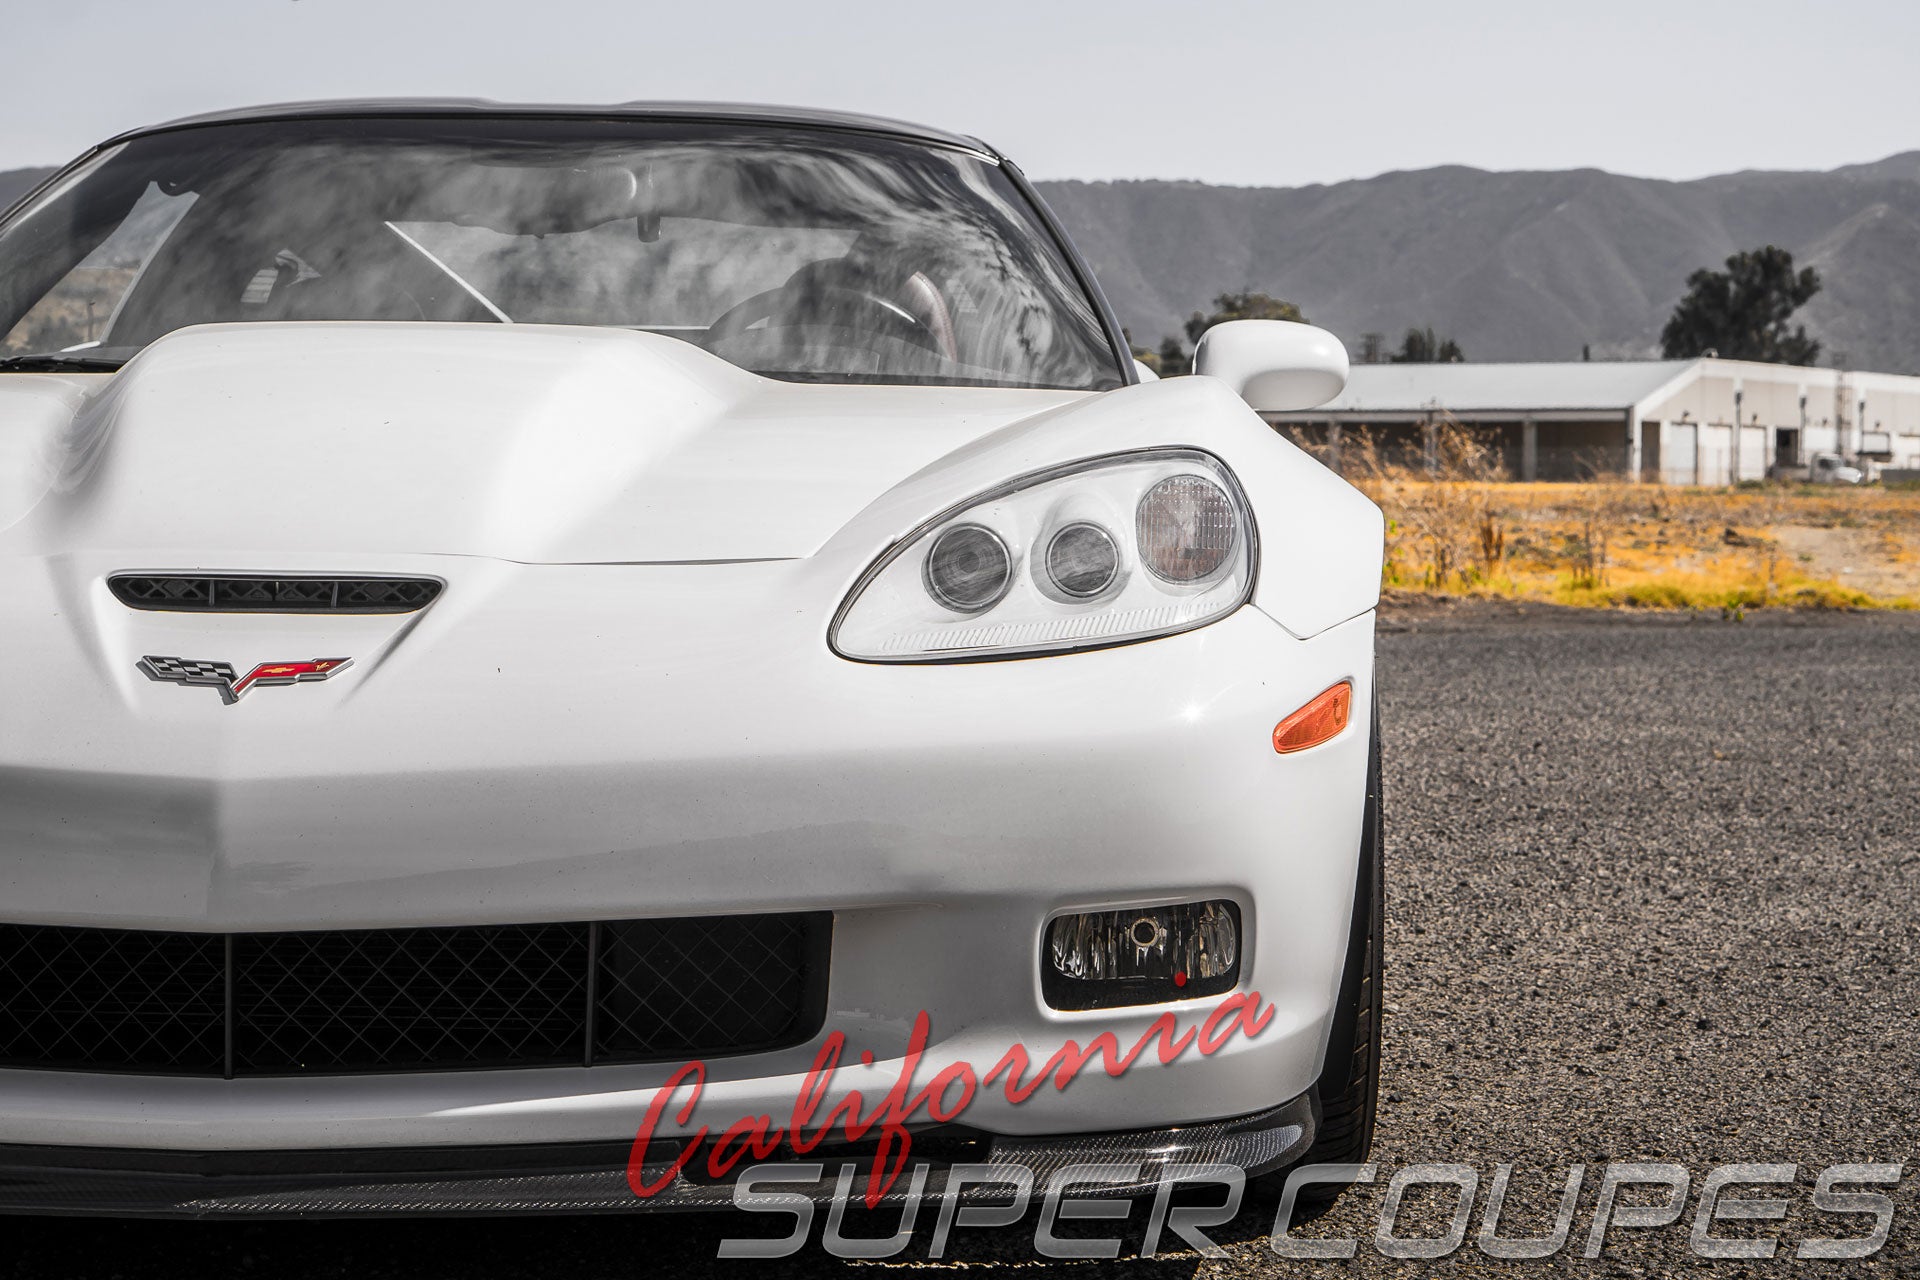 Corvette ZR1 Body Kits for C6 Coupes - Corvette: Sales, News